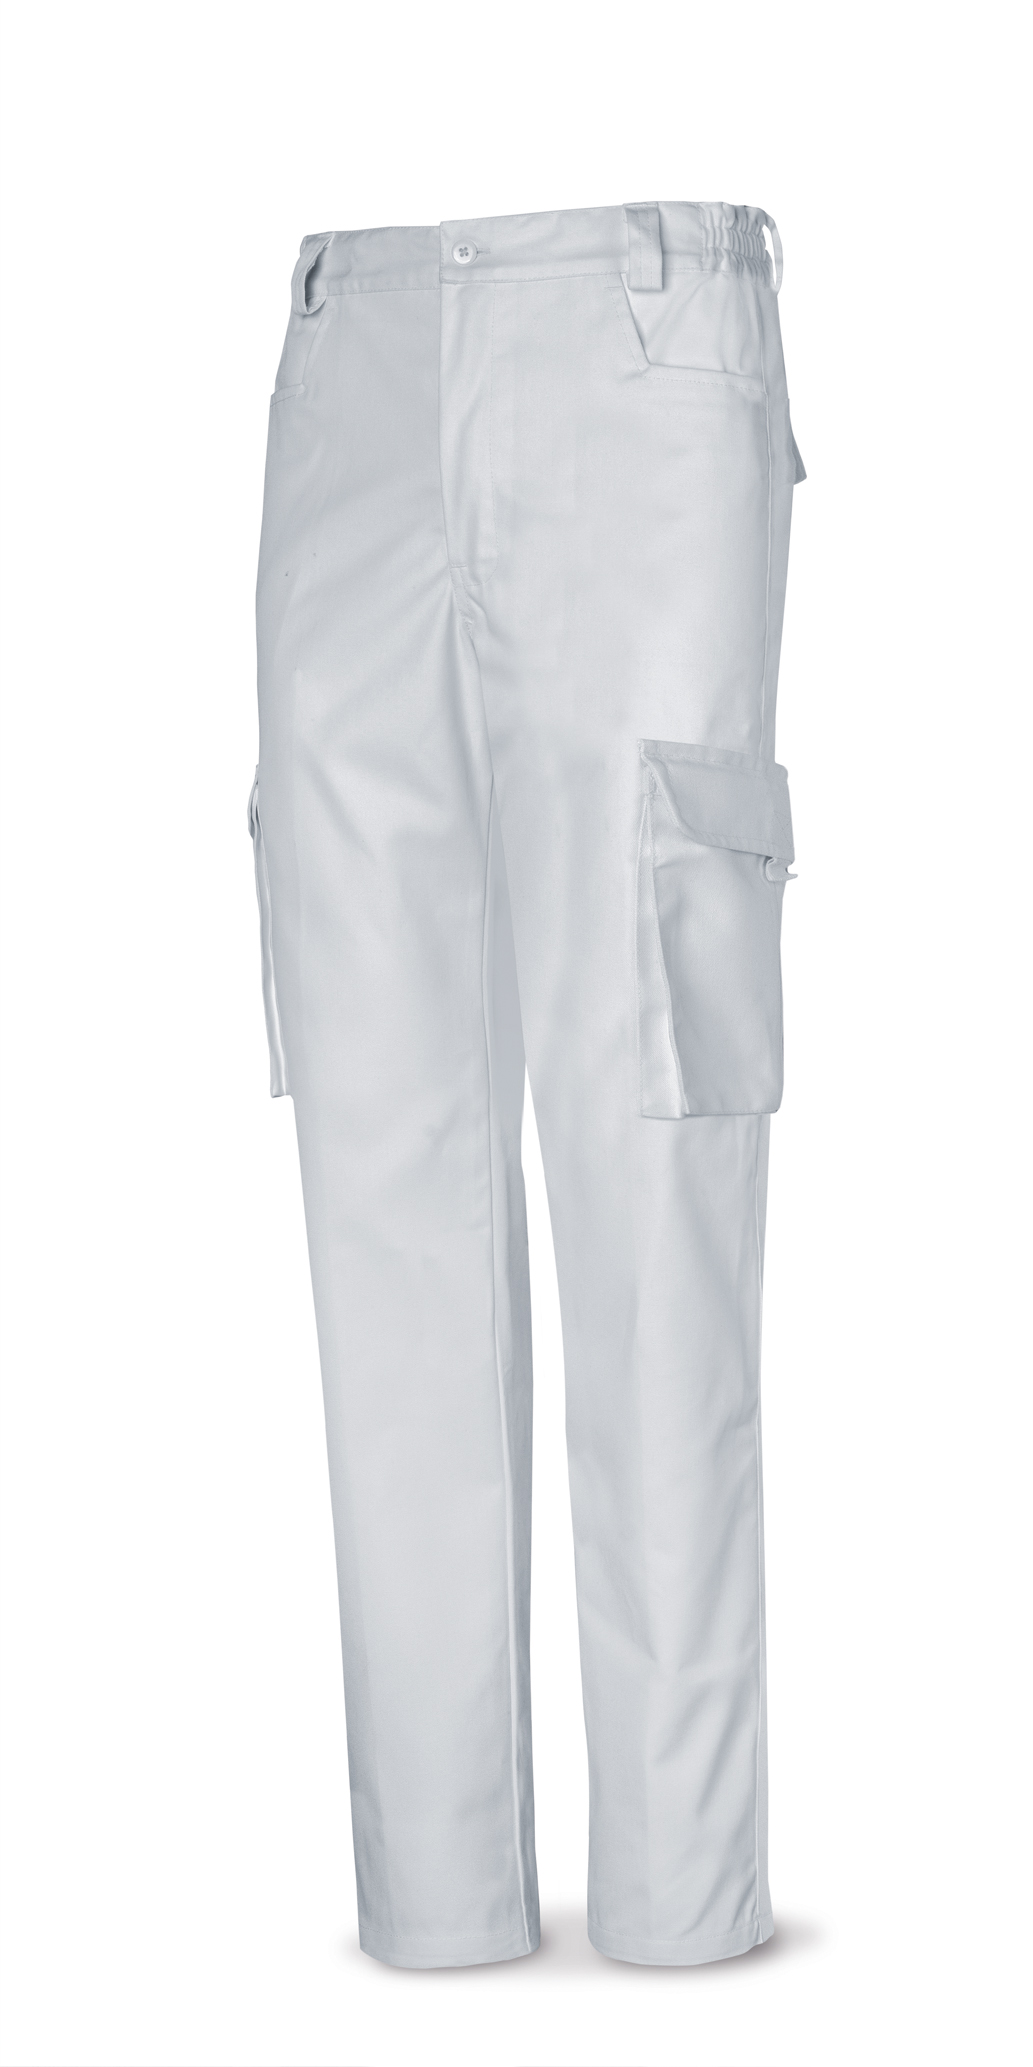 488-PB Top Vestuario Laboral Serie Top Pantalón blanco poliester/algodón de 245 g. Multibolsillo